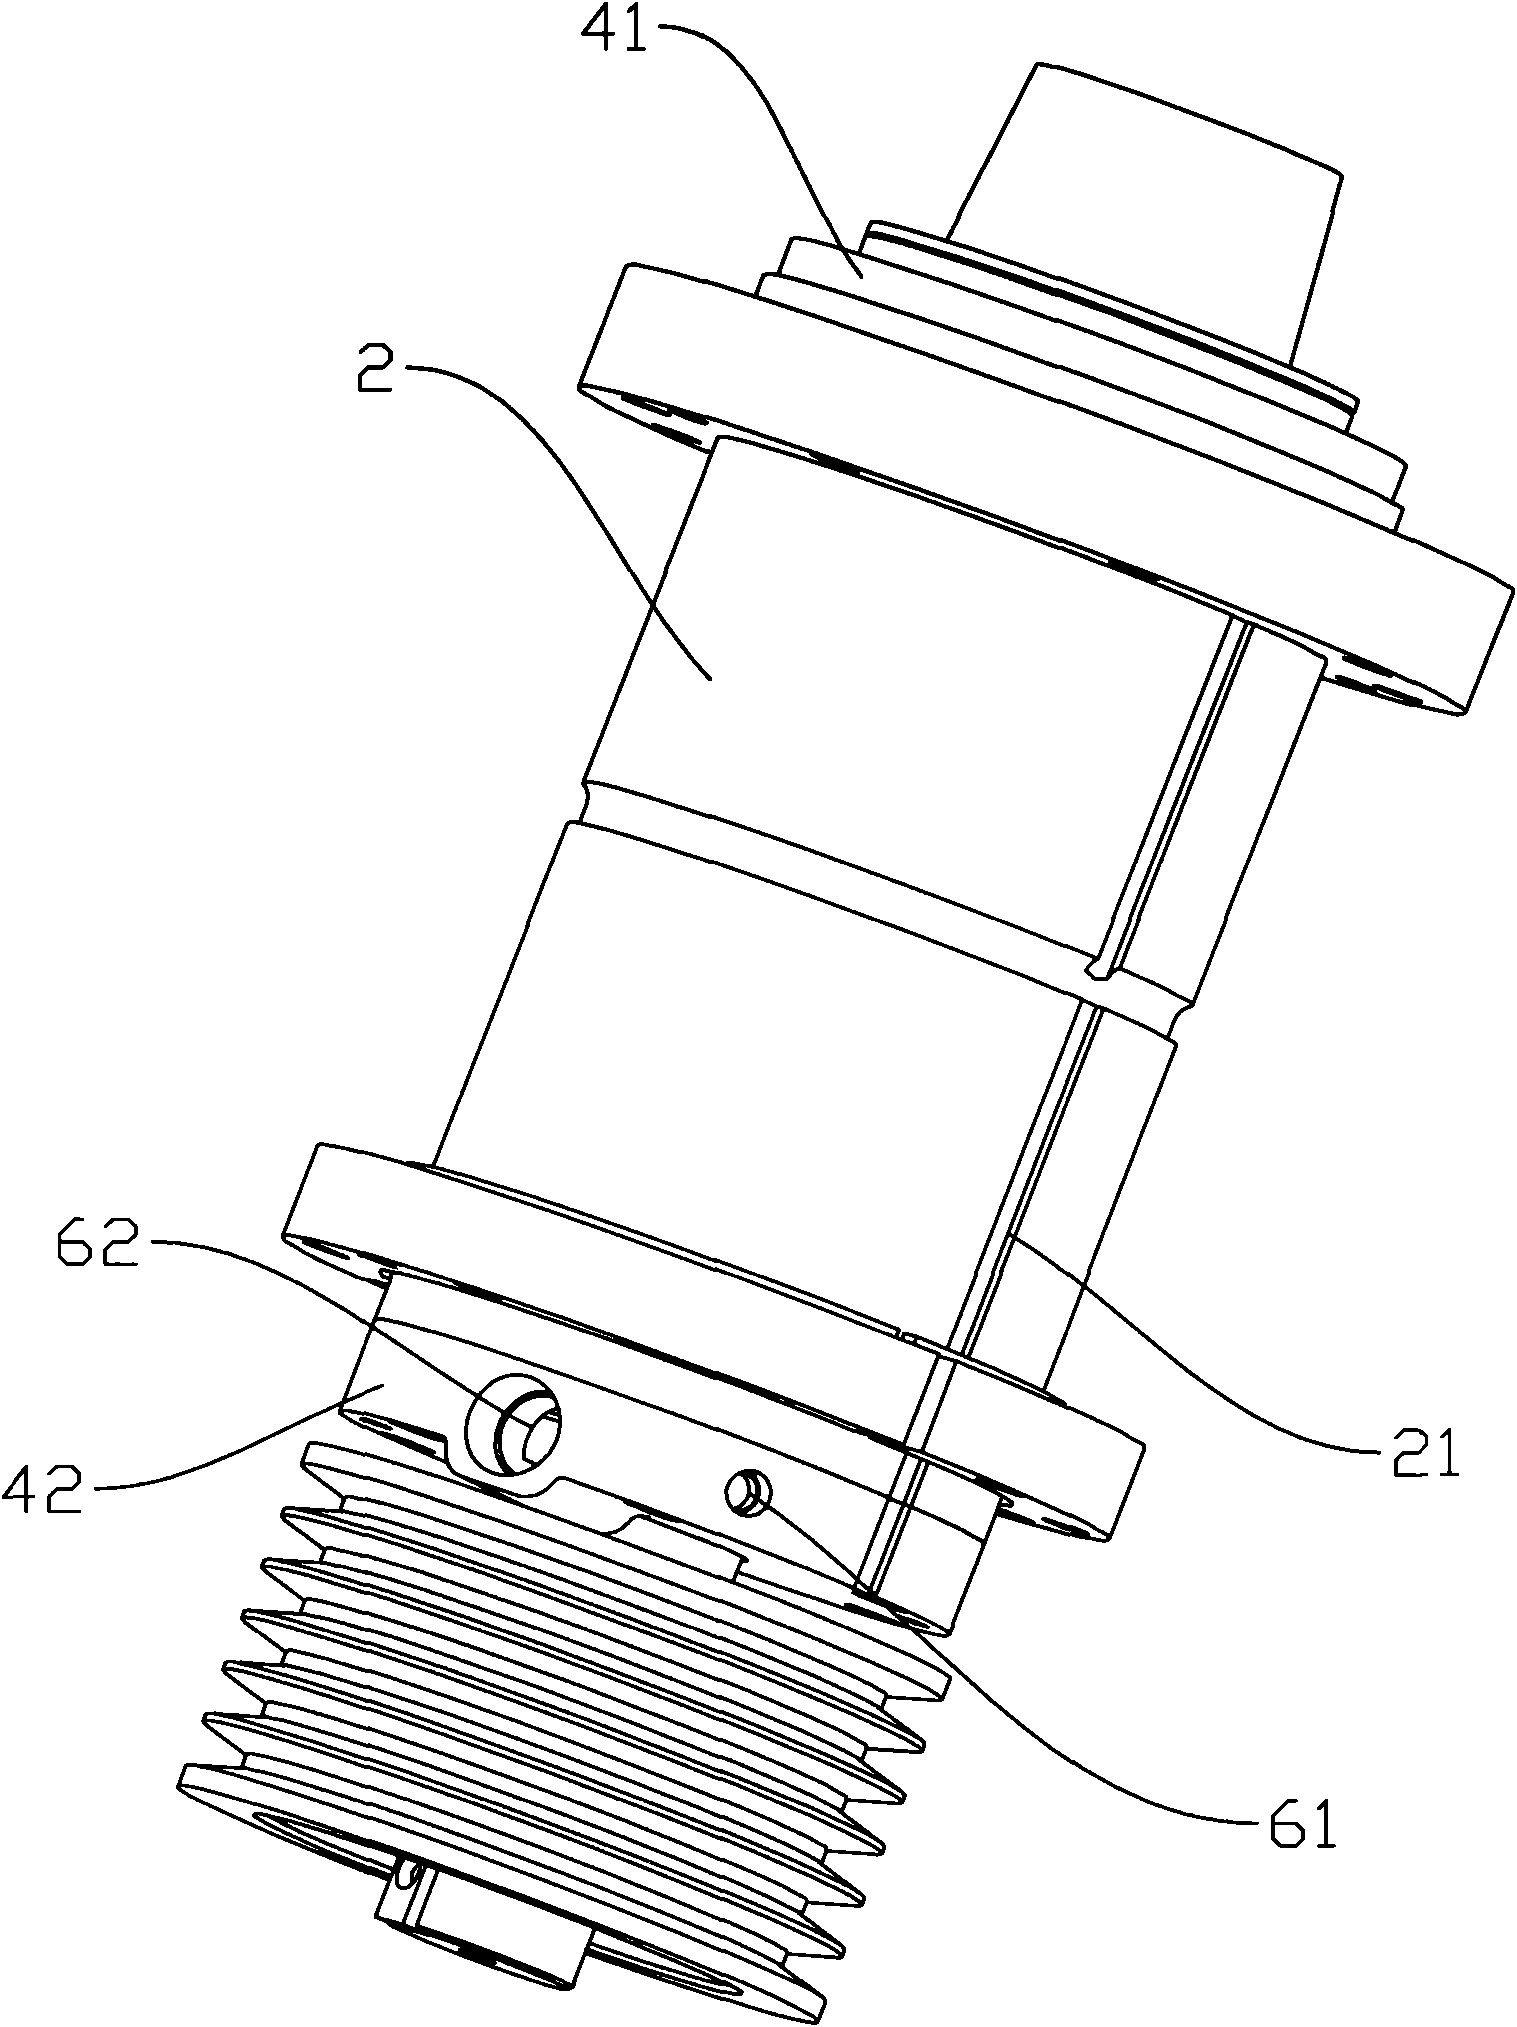 Main shaft system of vertical shaft type sand maker